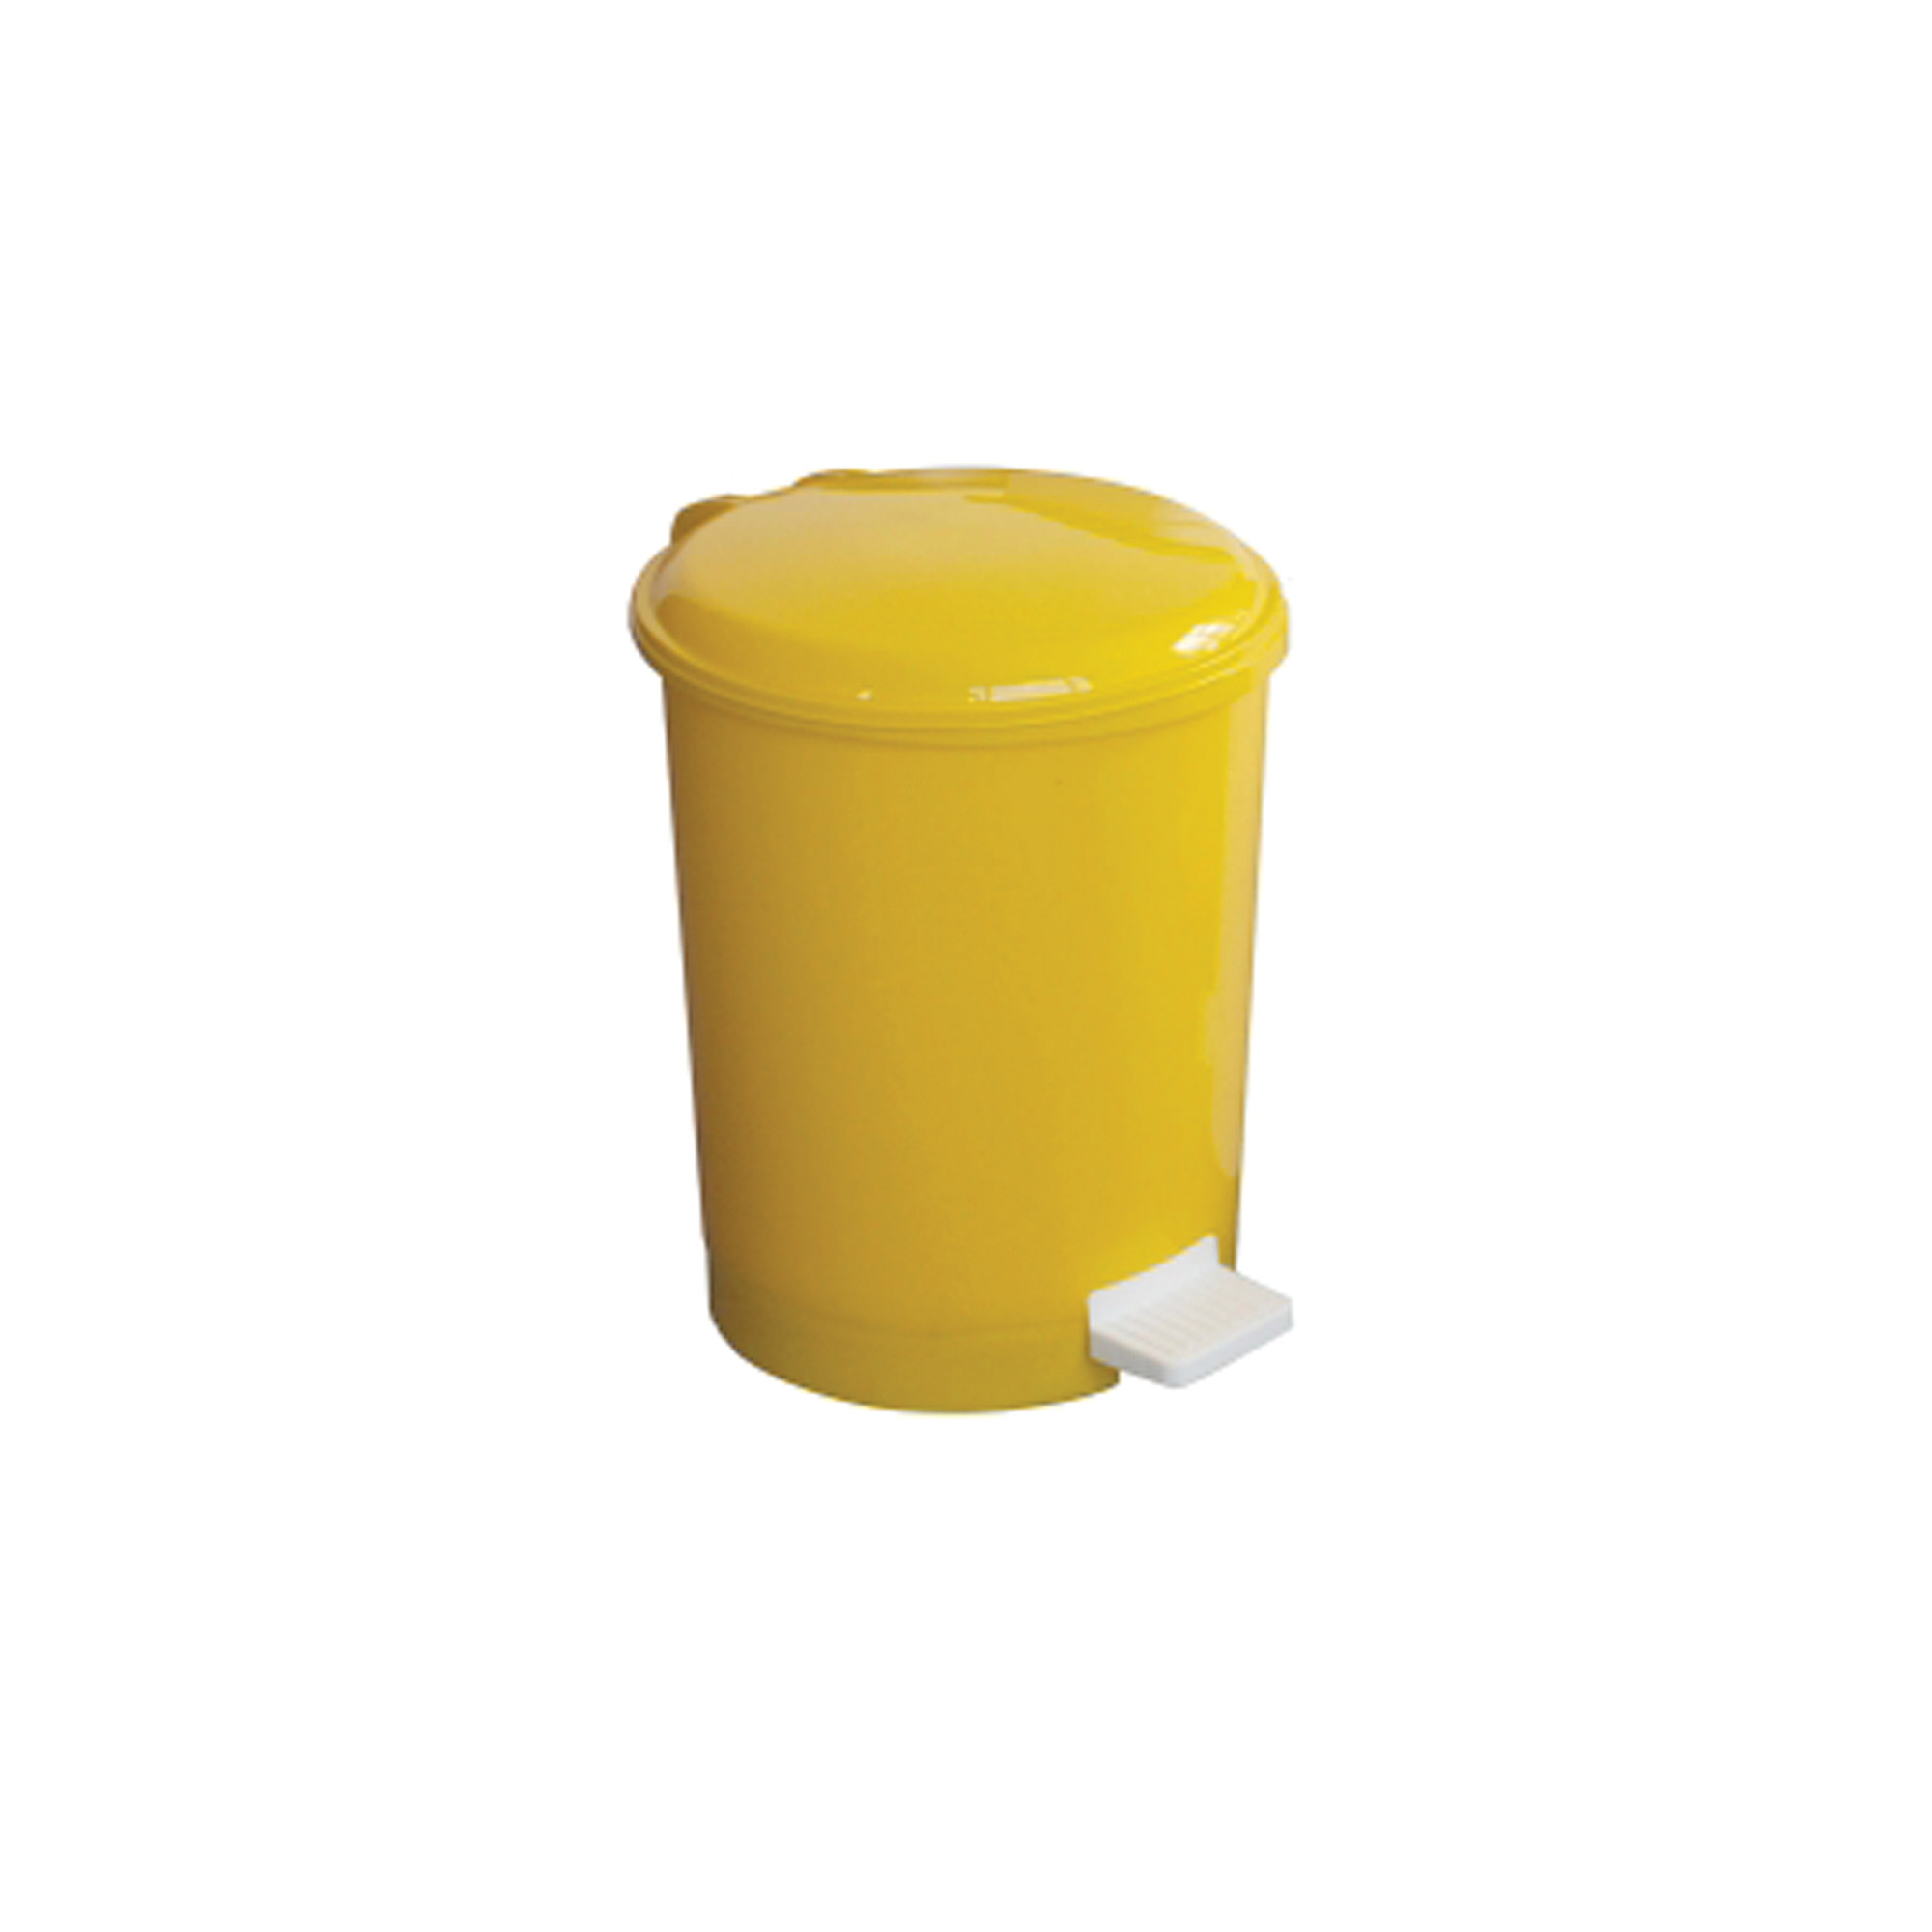 20L Yellow Clinical Waste Plastic Pedal Bin - EACH